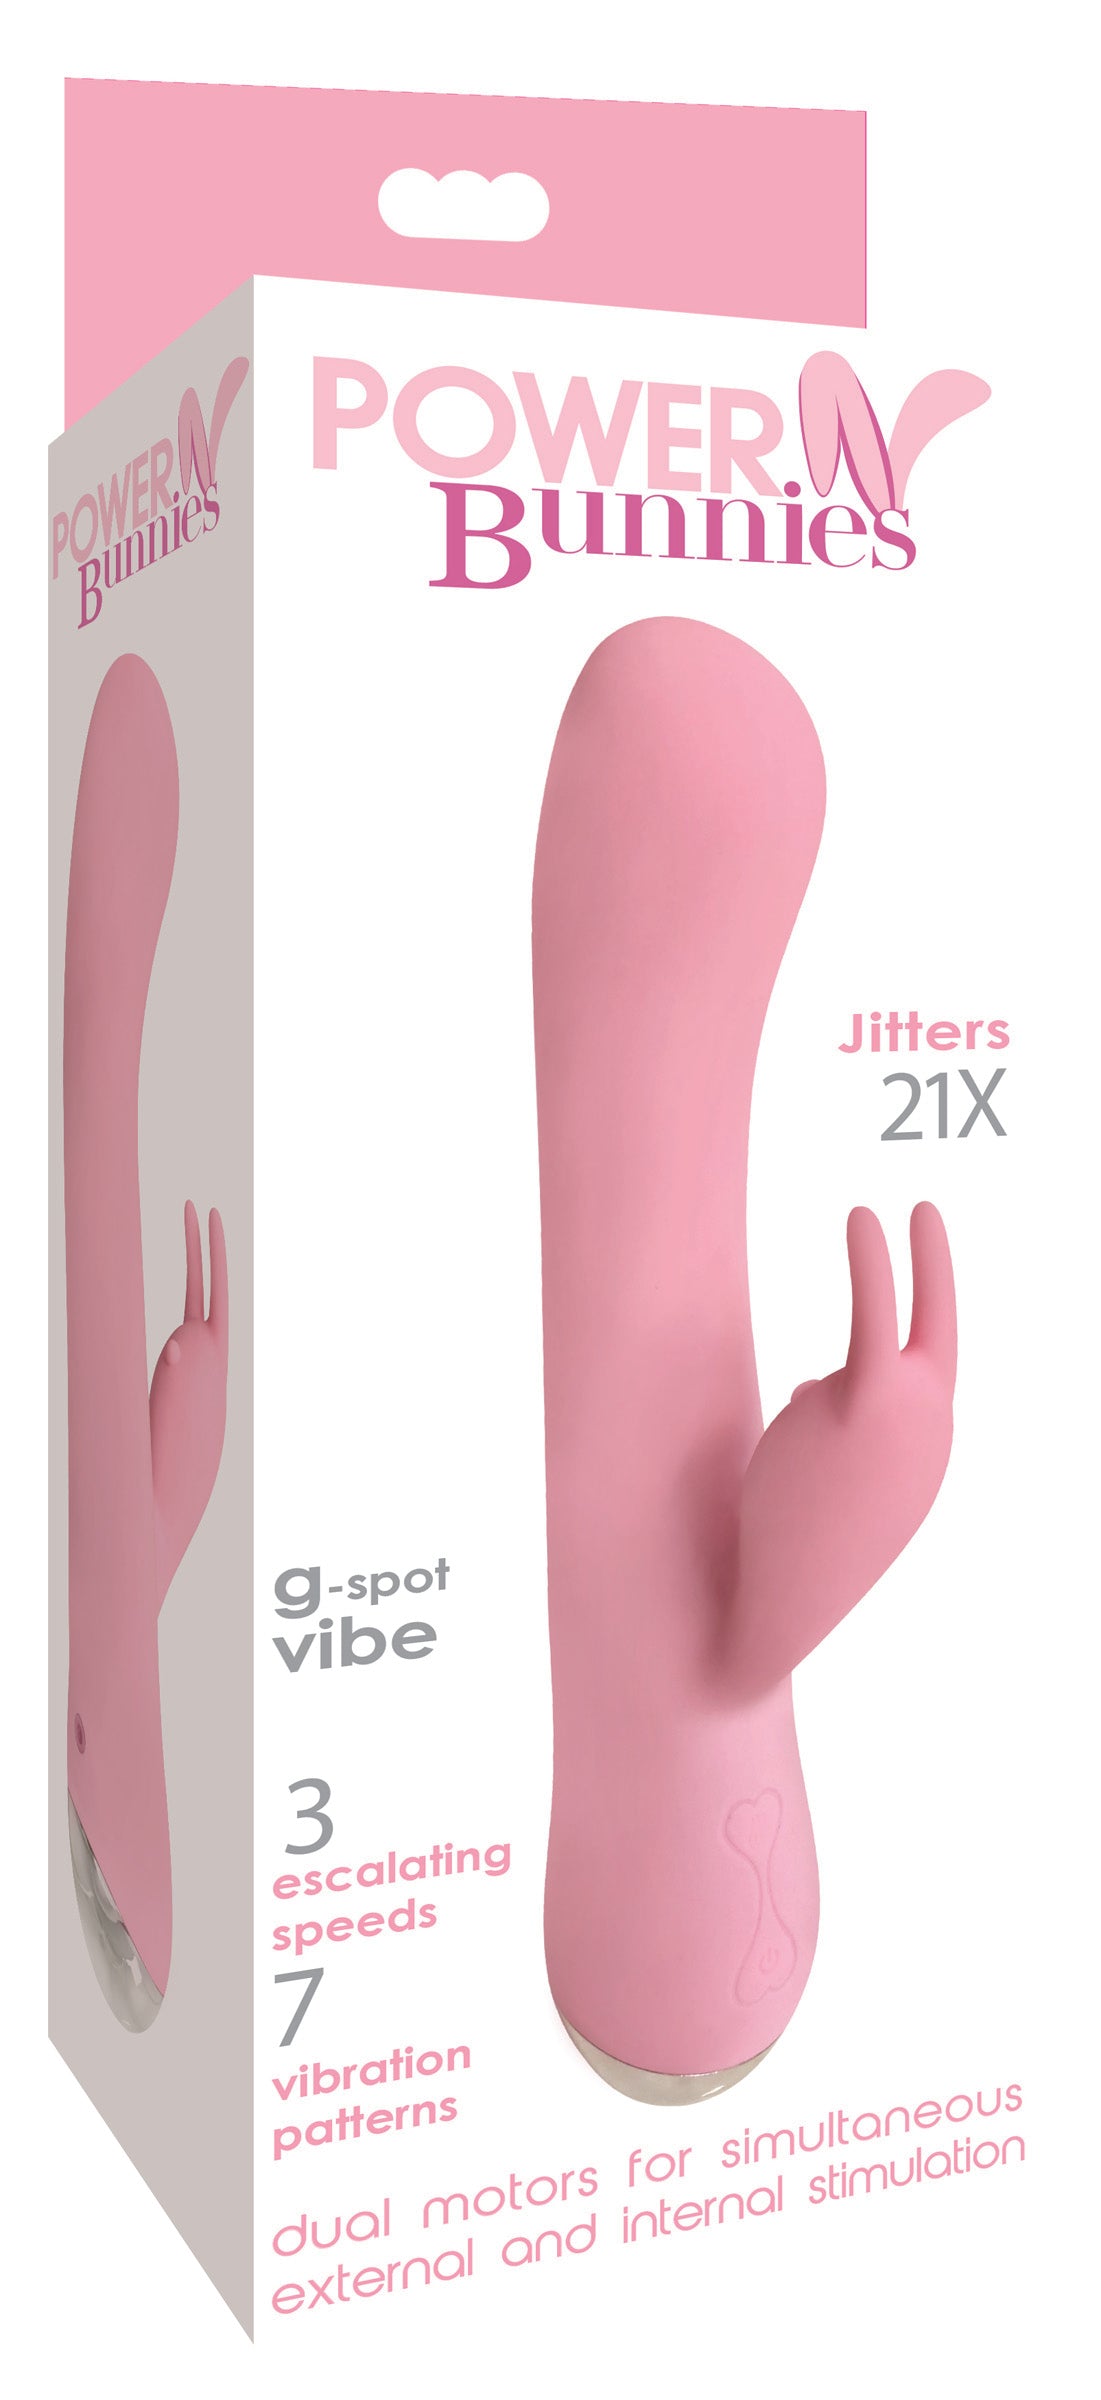 Jitters 21X Silicone Rabbit Vibrator